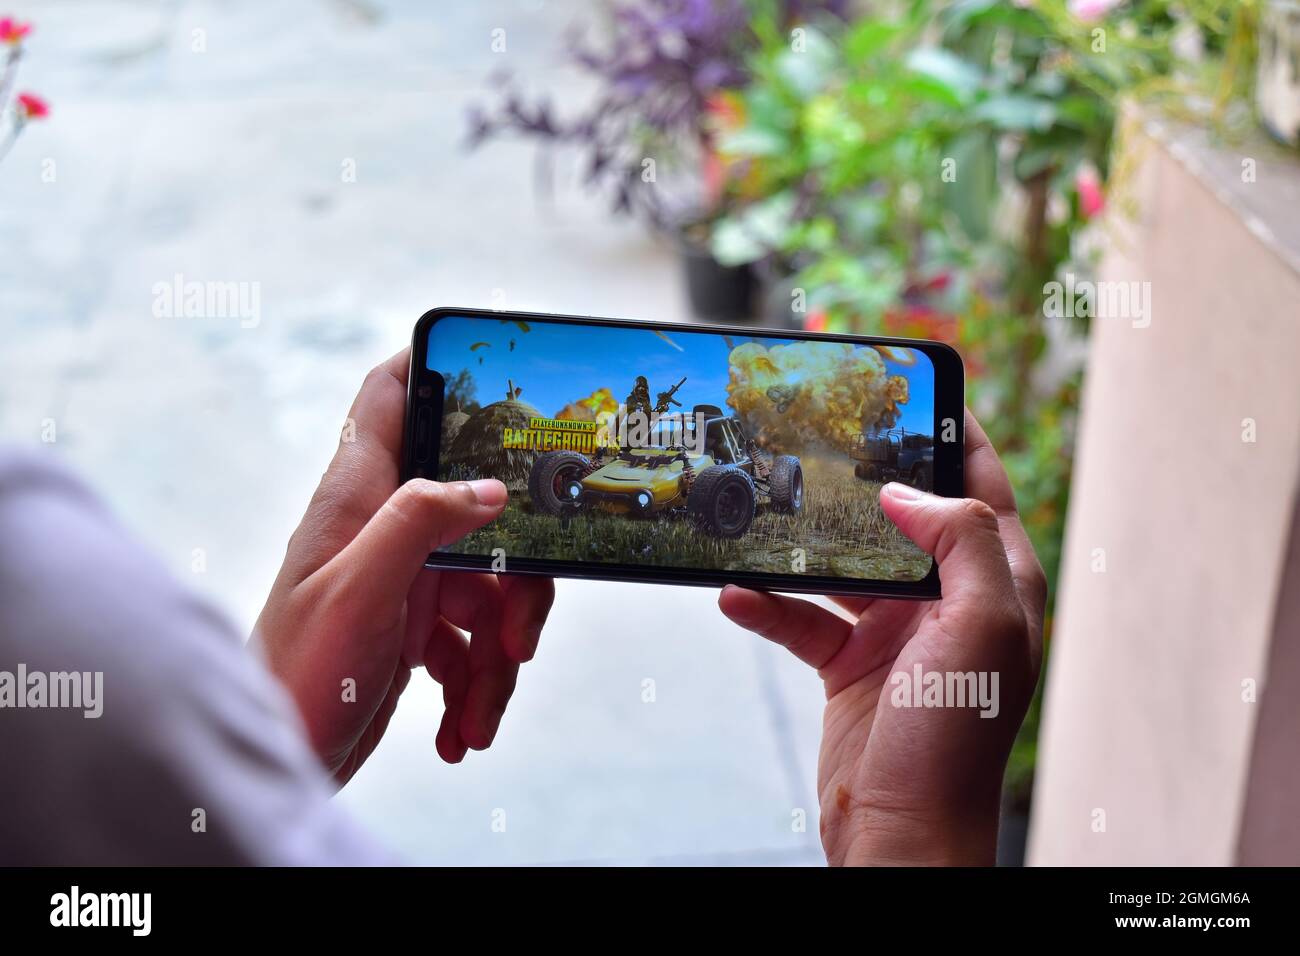 INDIA, DELHI - October 19, 2019: Playing Pubg on Smartphone Stock Photo